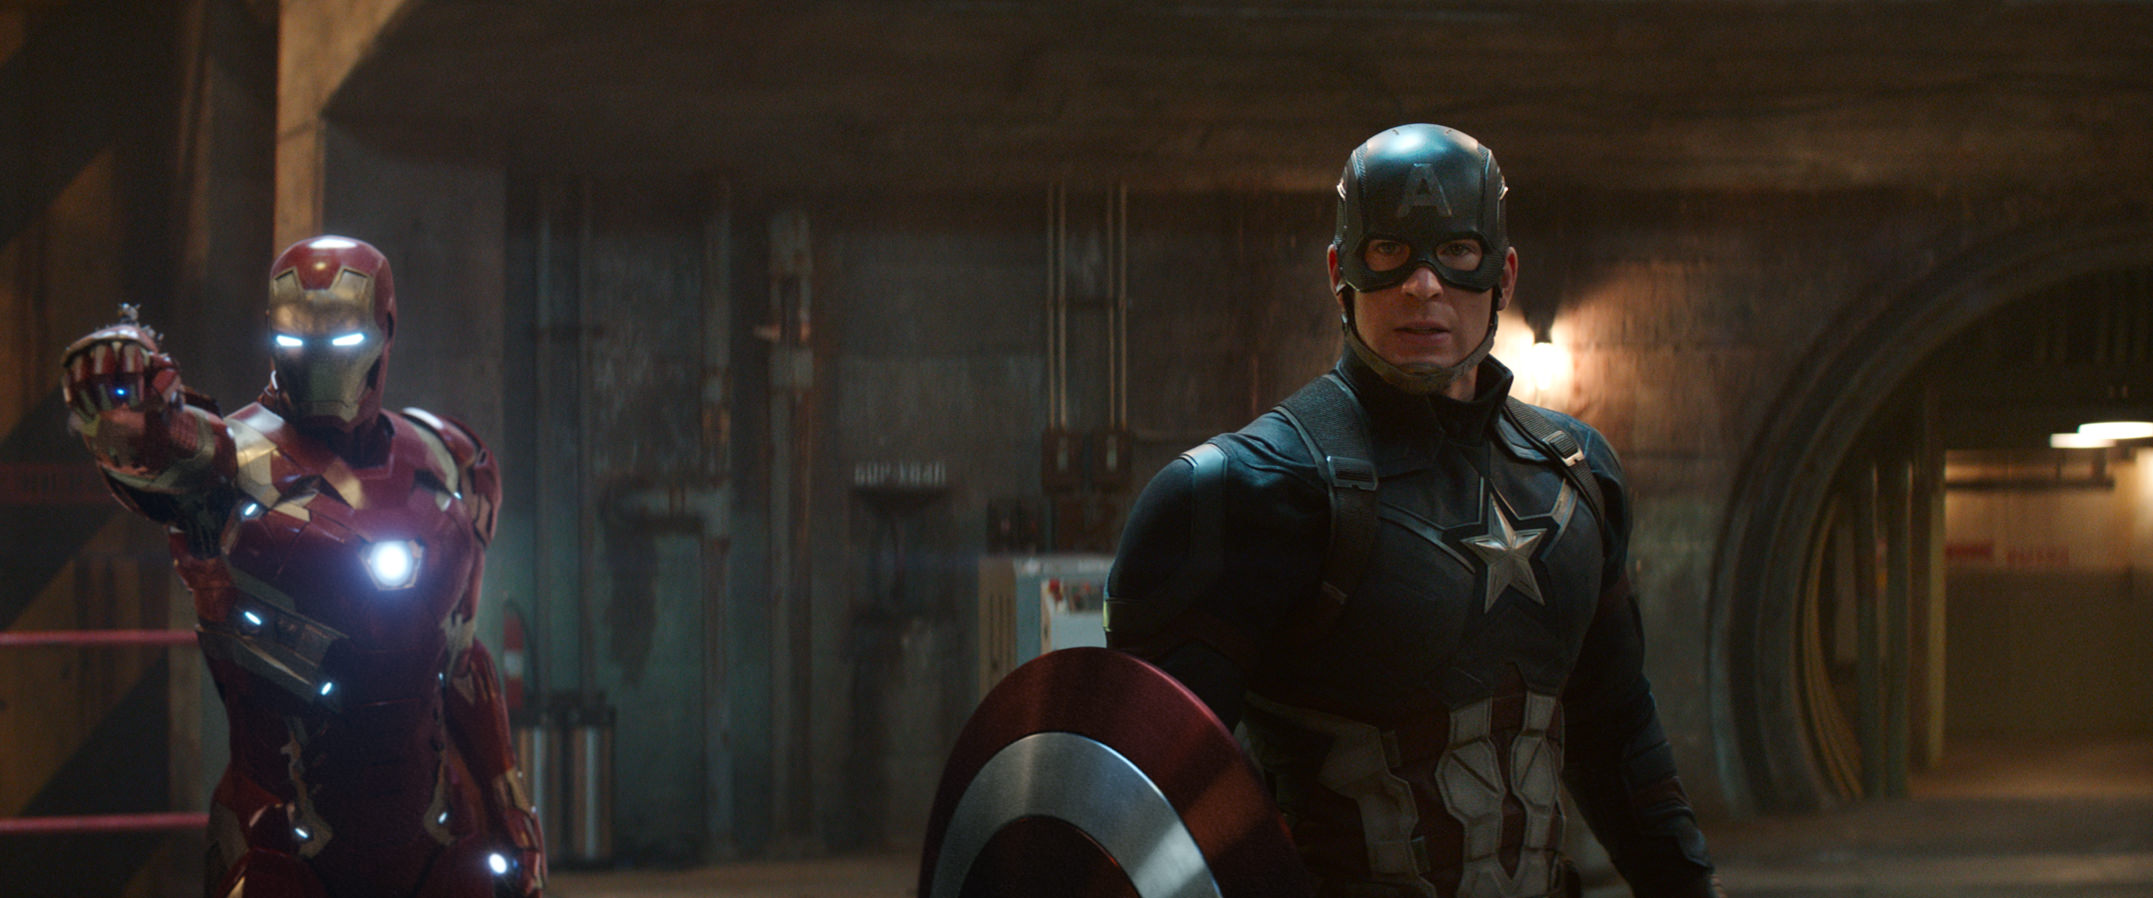 Marvel's Captain America: Civil War..L to R: Iron Man/Tony Stark (Robert Downey Jr.) and Steve Rogers/Captain America (Chris Evans)..Photo Credit: Film Frame..© Marvel 2016